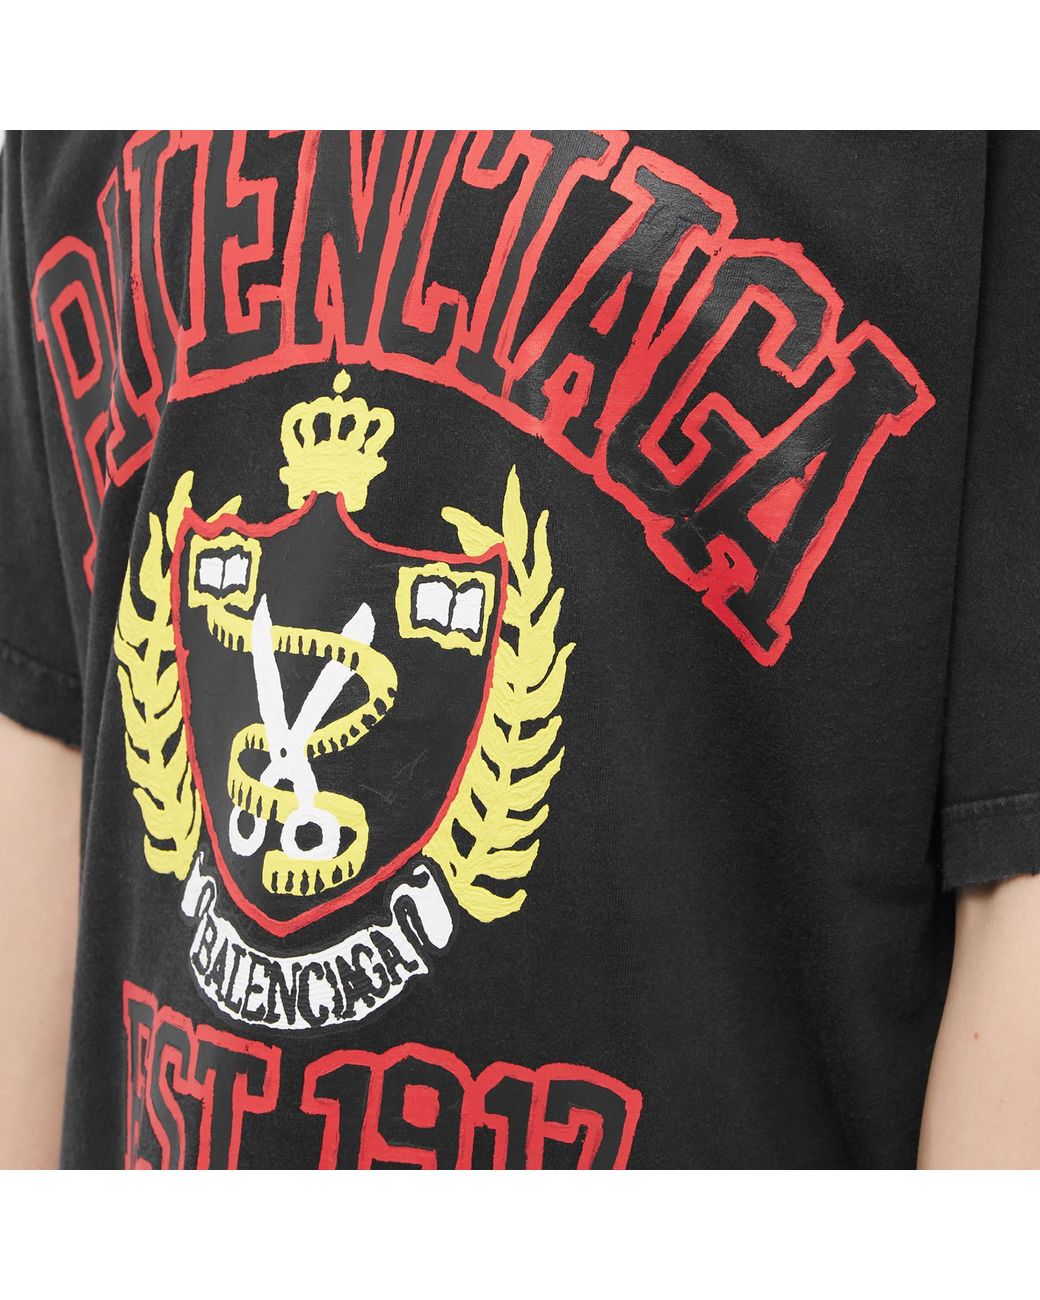 Balenciaga Fashion Institute Medium Fit T-Shirt Washed Black for Men